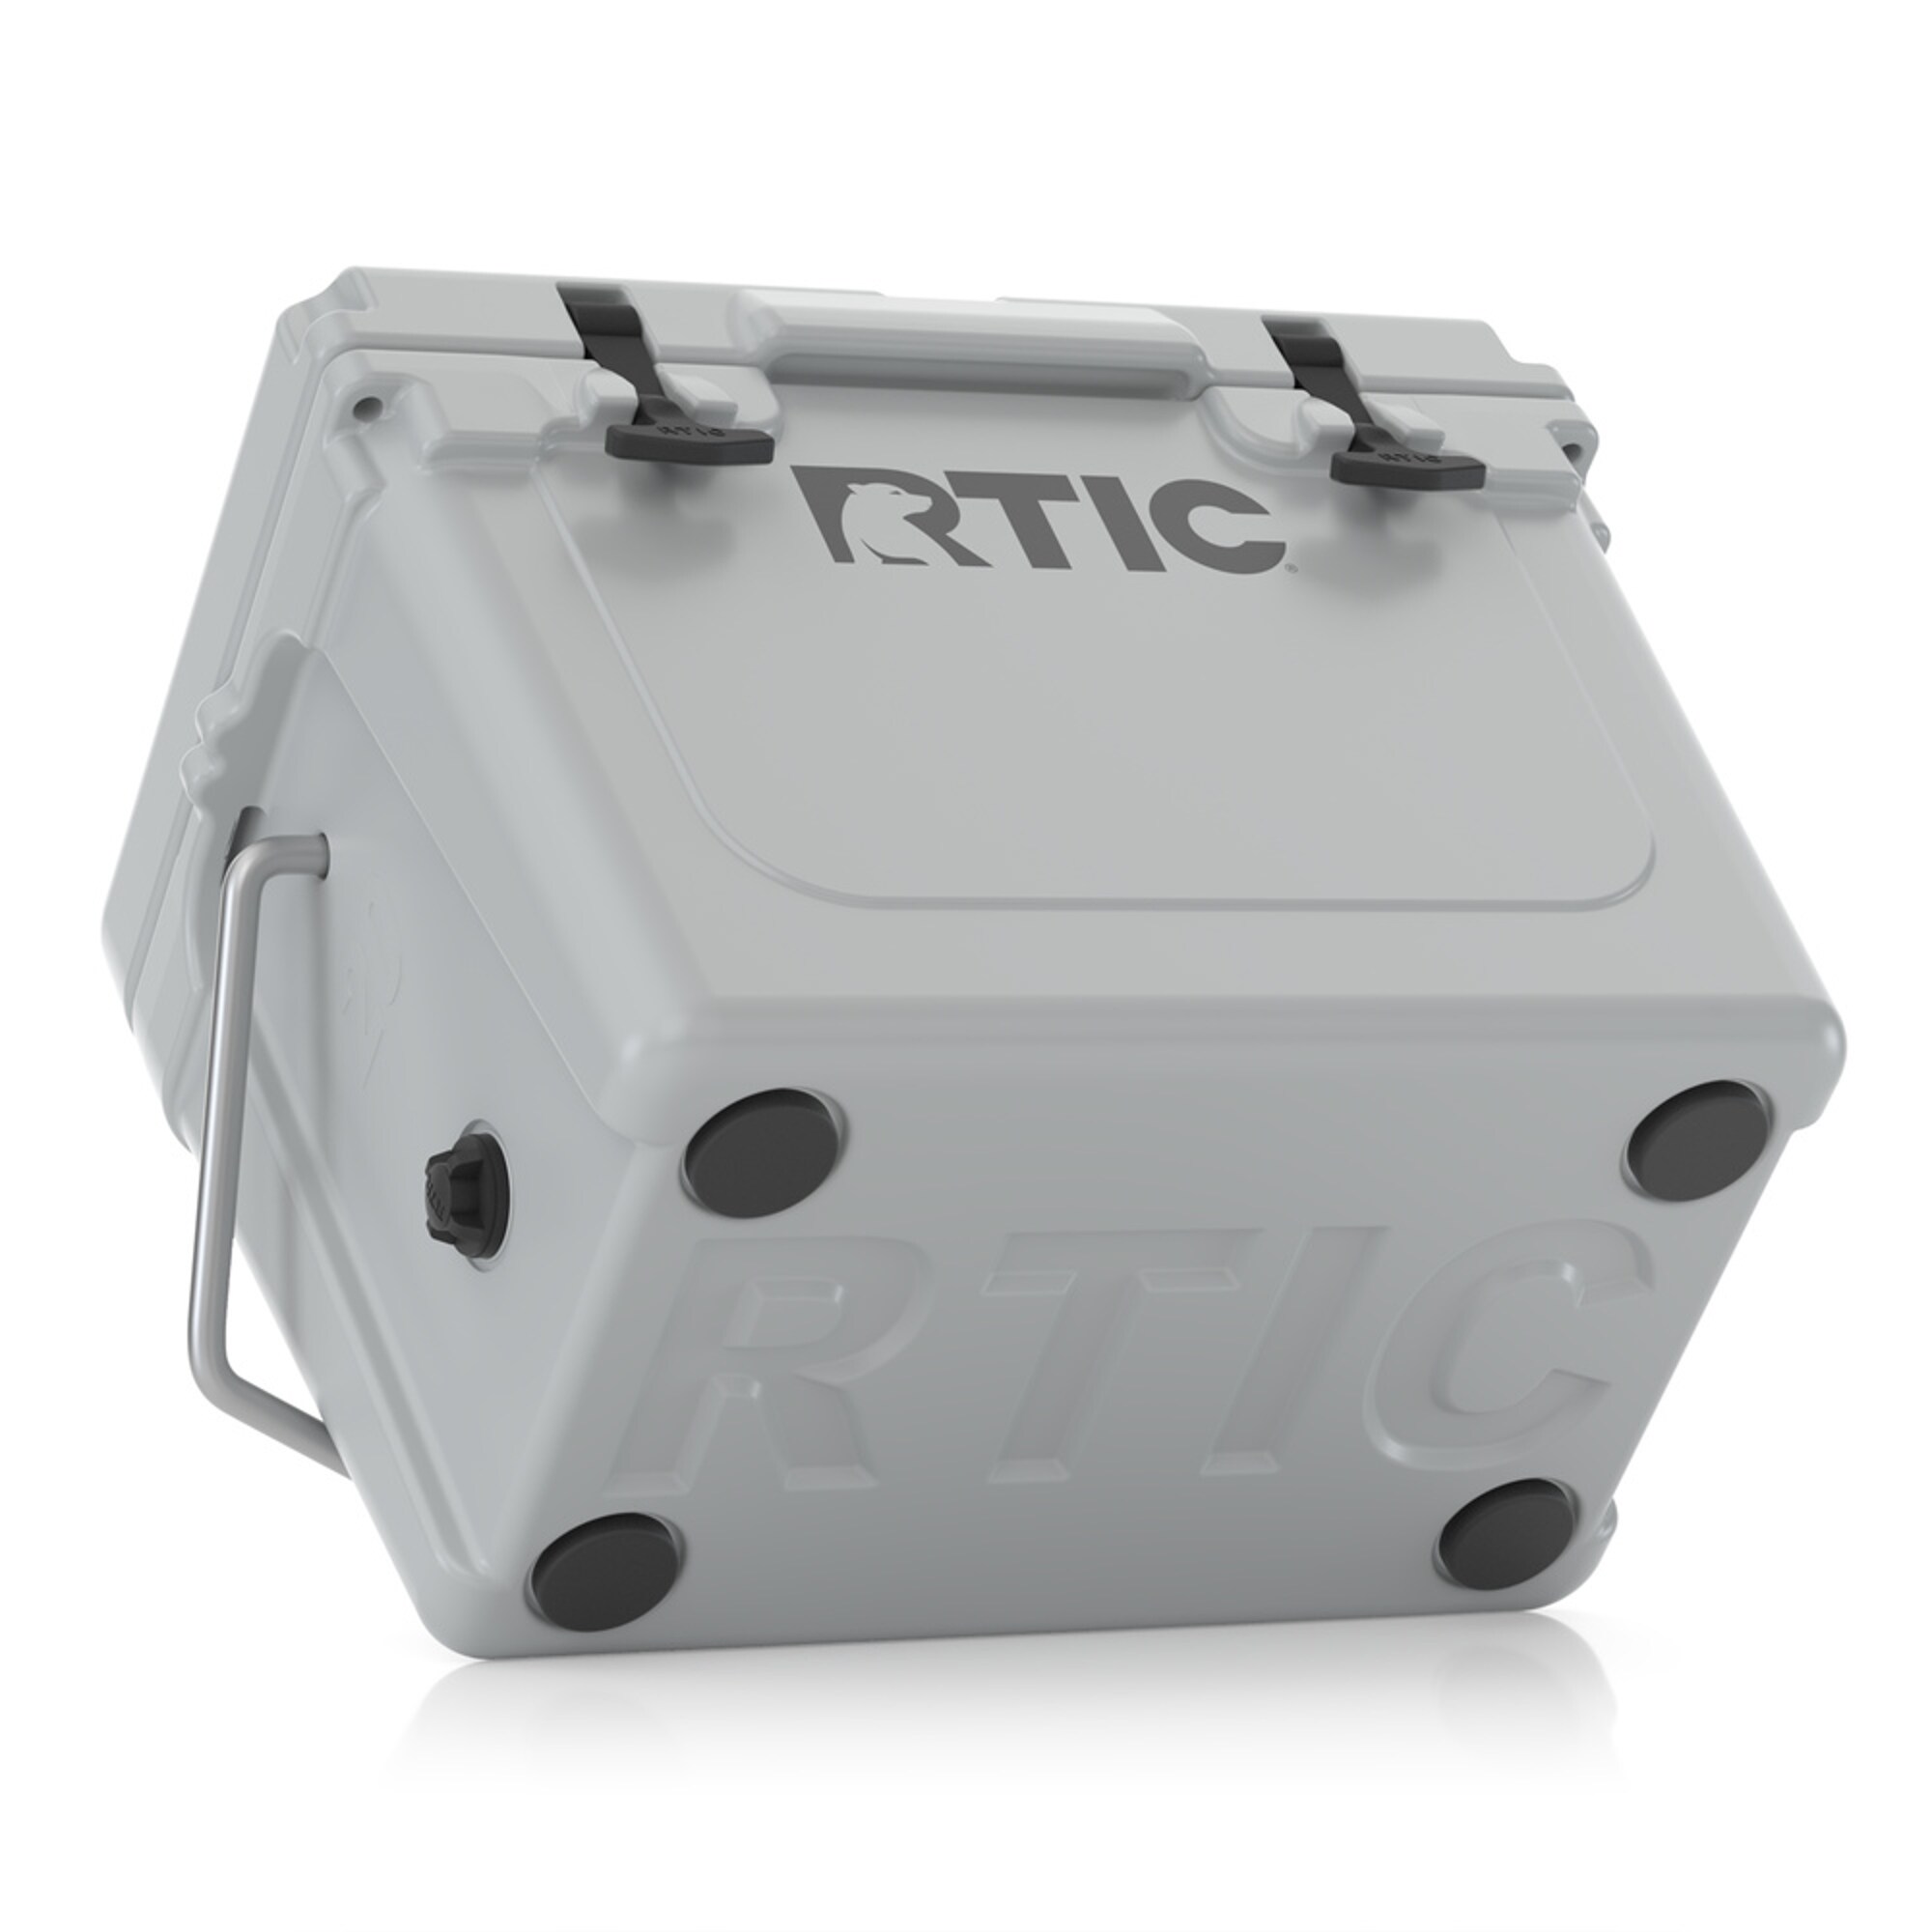 RTIC Cooler – BLA / SFS